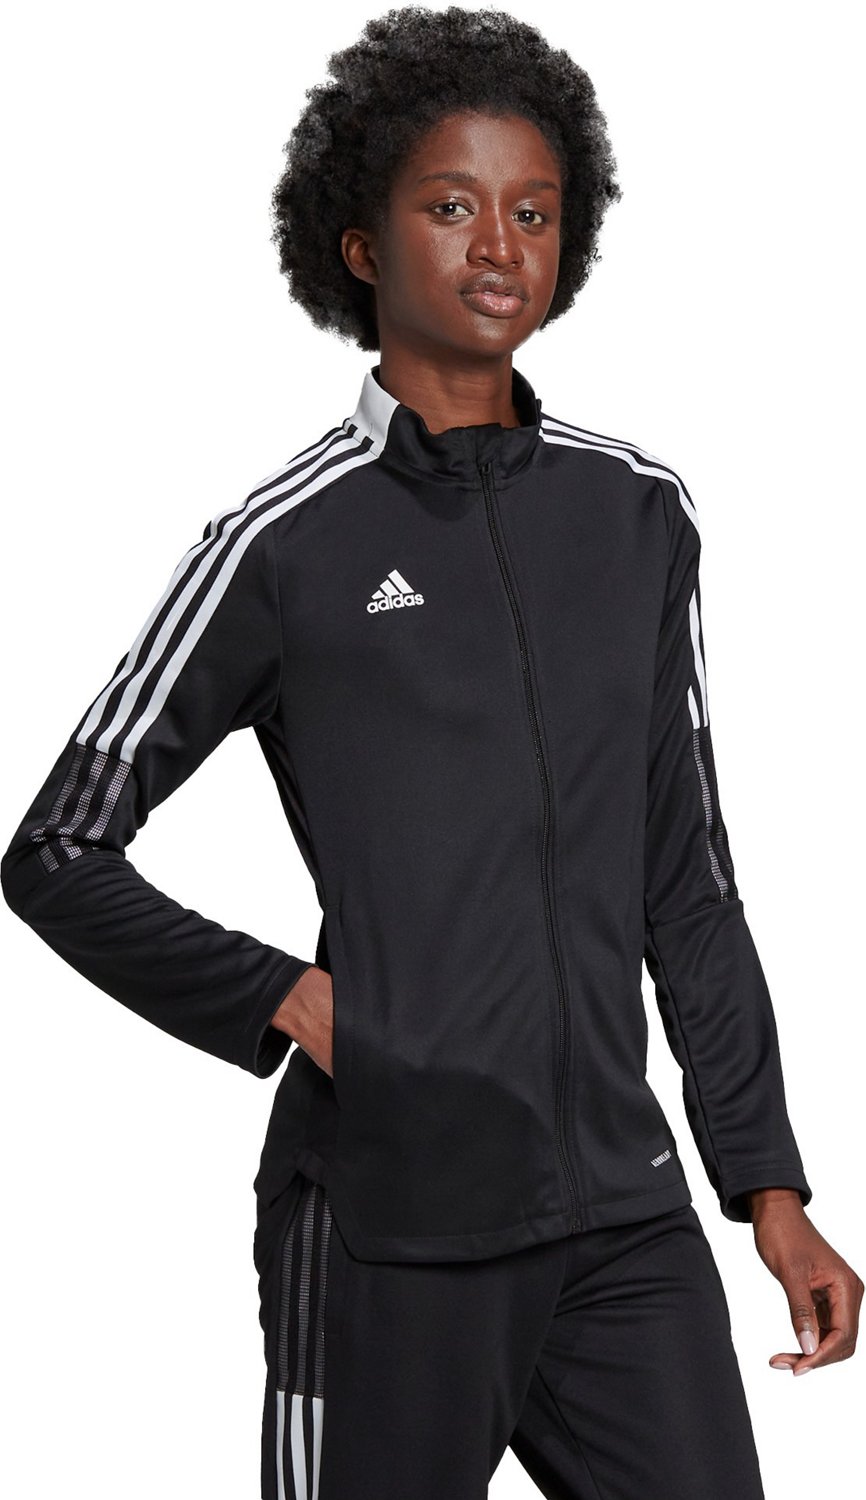 Adidas Women's Tiro 21 Track Jacket, Black,S - US